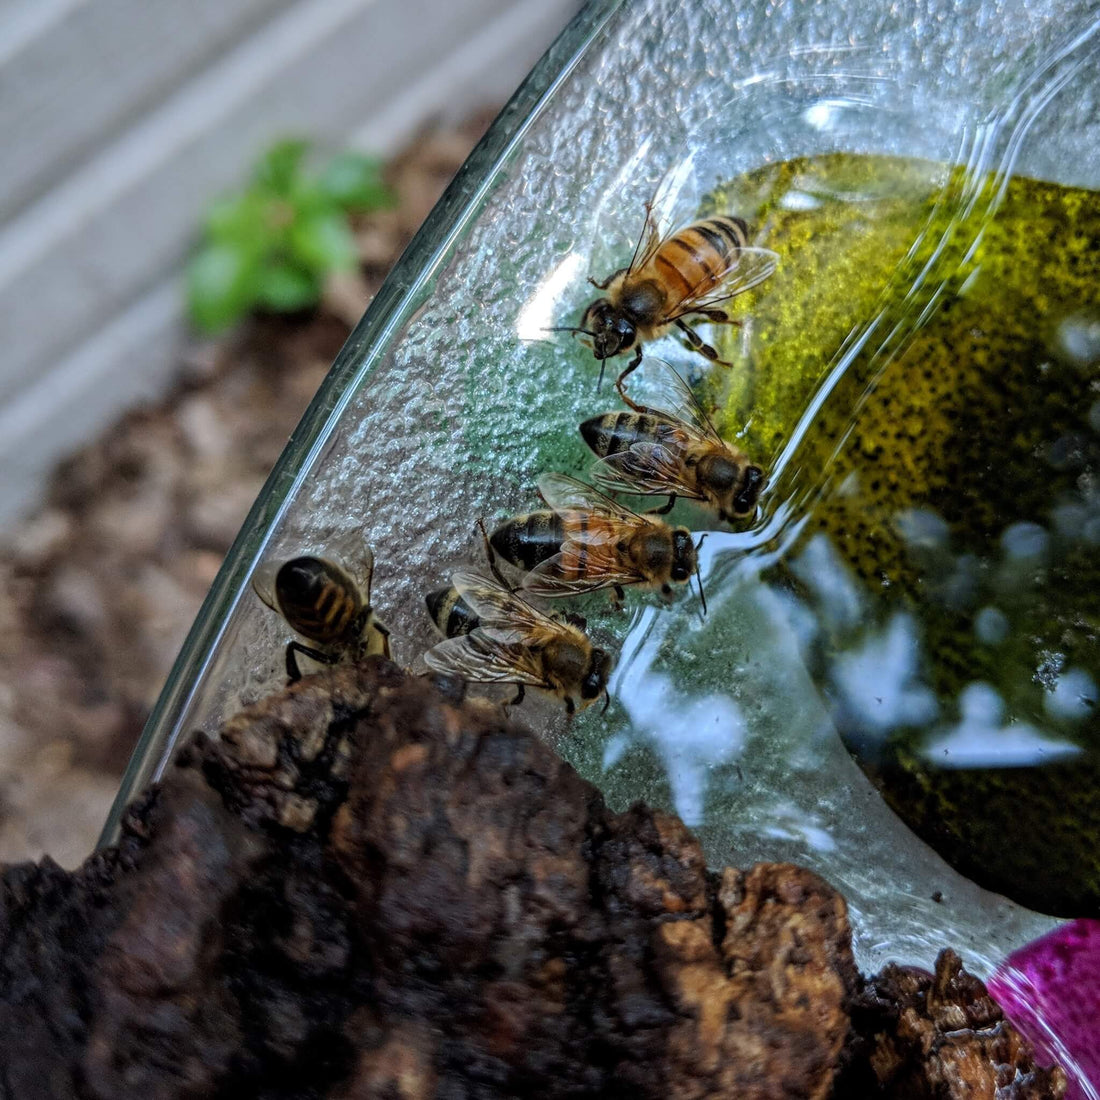 Bees collecting water in glass birdbath.